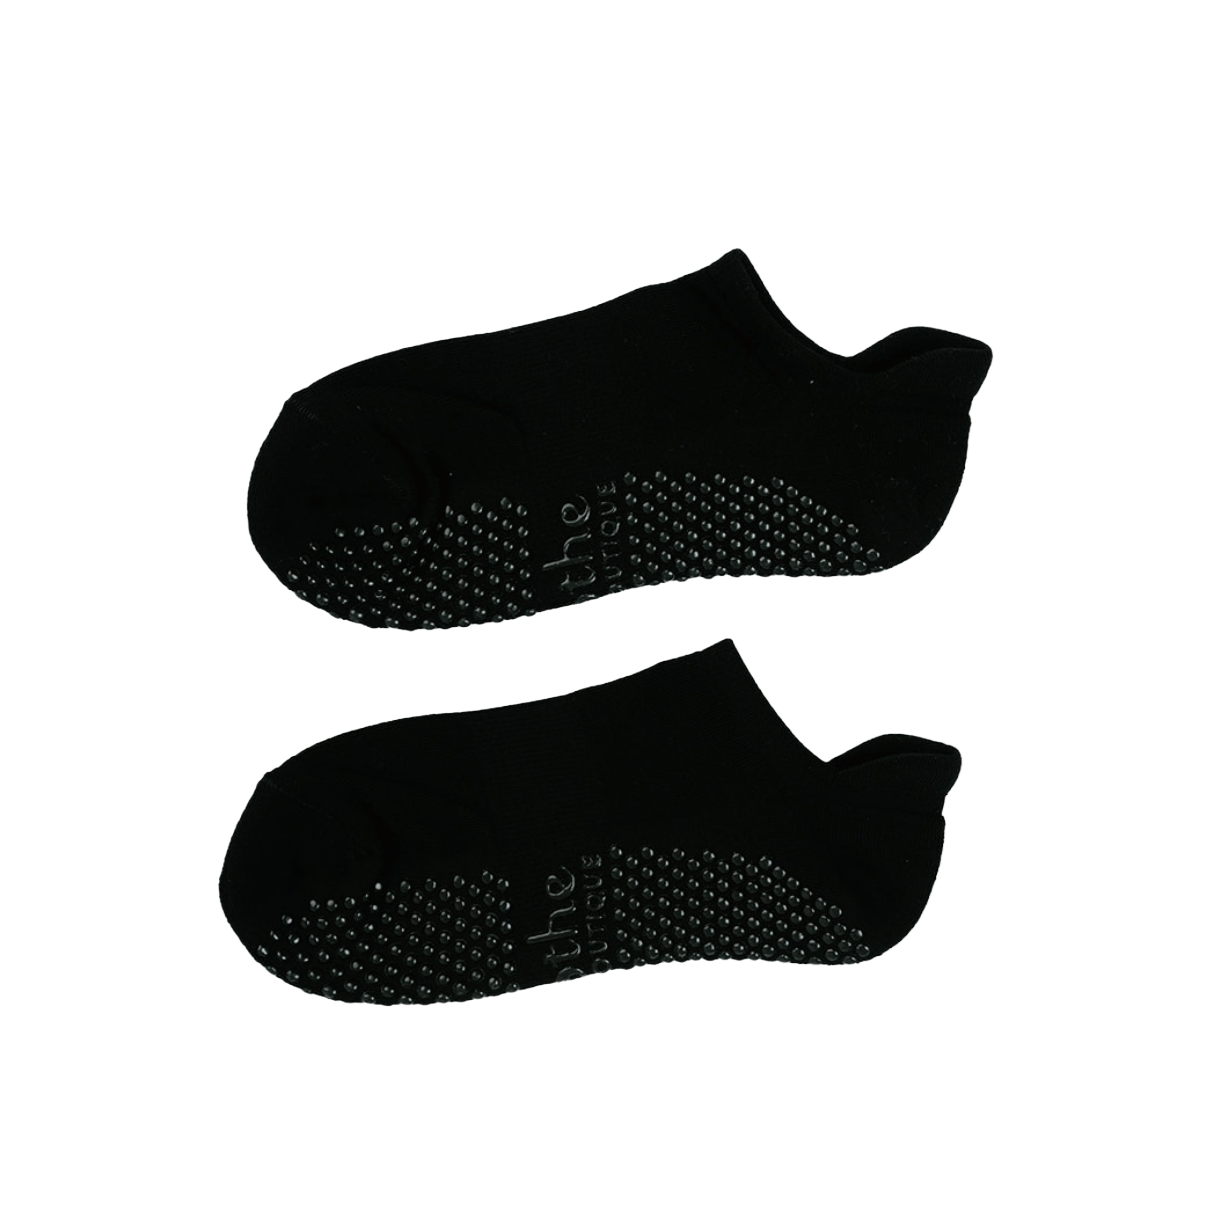 Get Grounded (super snug) low cut grip socks